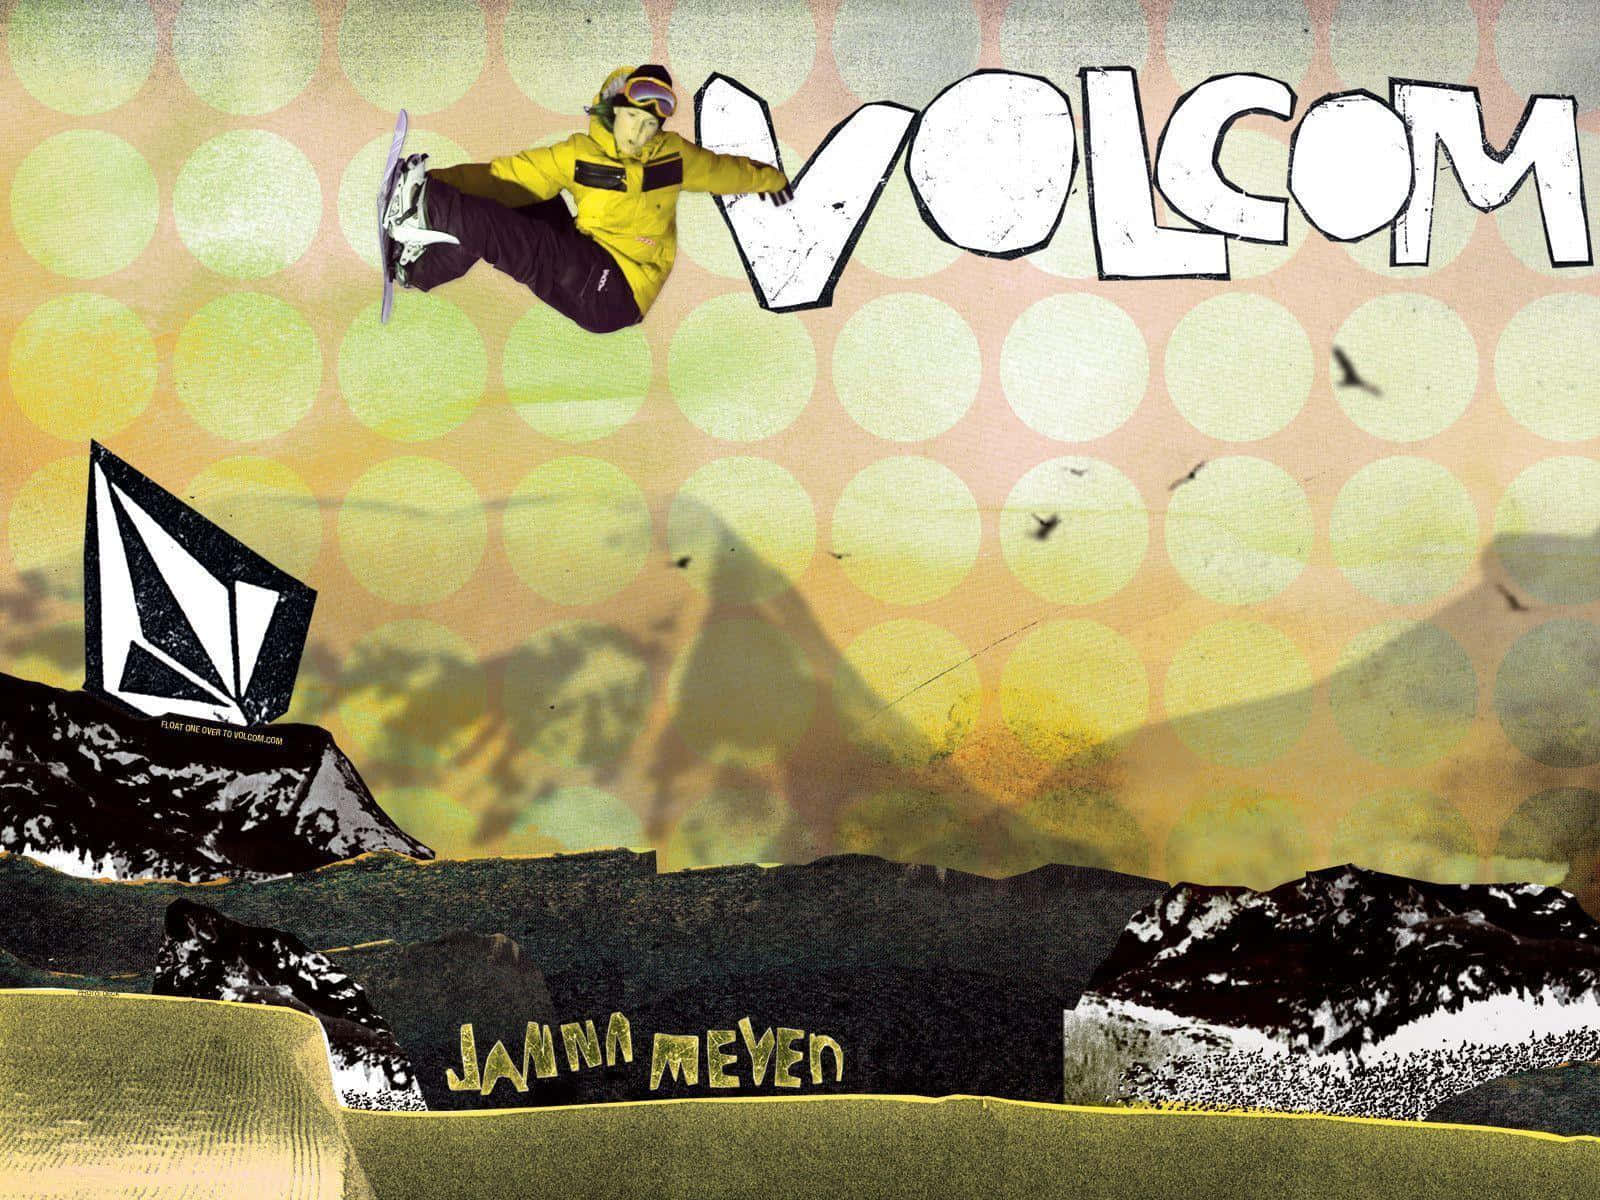 Volcom Snowboarding Style Artwork Wallpaper